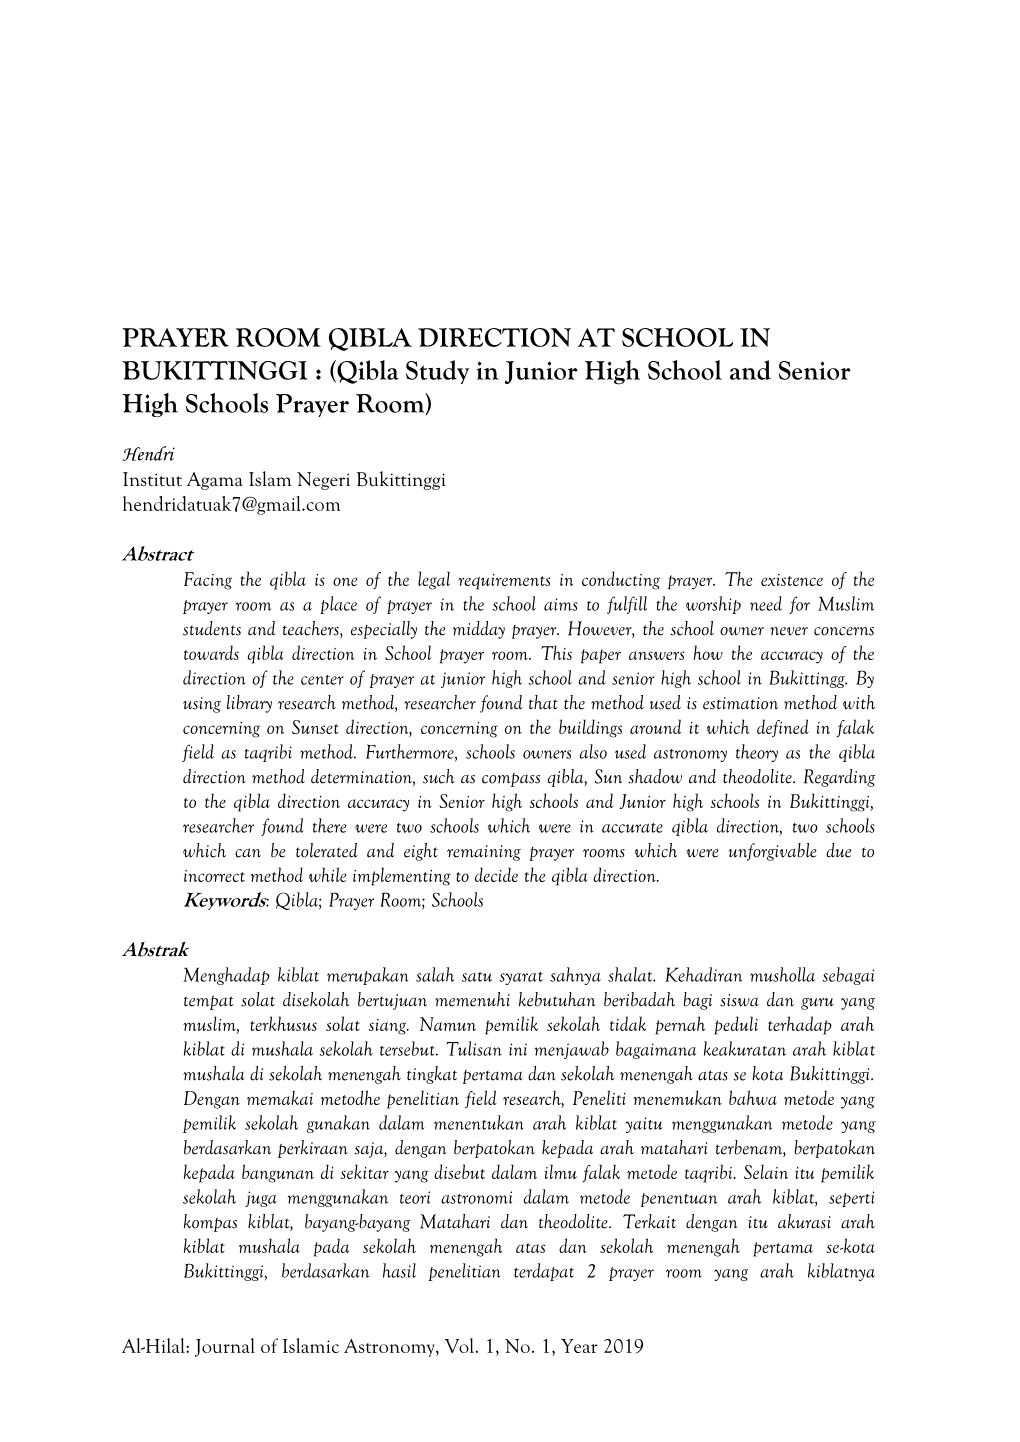 PRAYER ROOM QIBLA DIRECTION at SCHOOL in BUKITTINGGI : (Qibla Study in Junior High School and Senior High Schools Prayer Room)